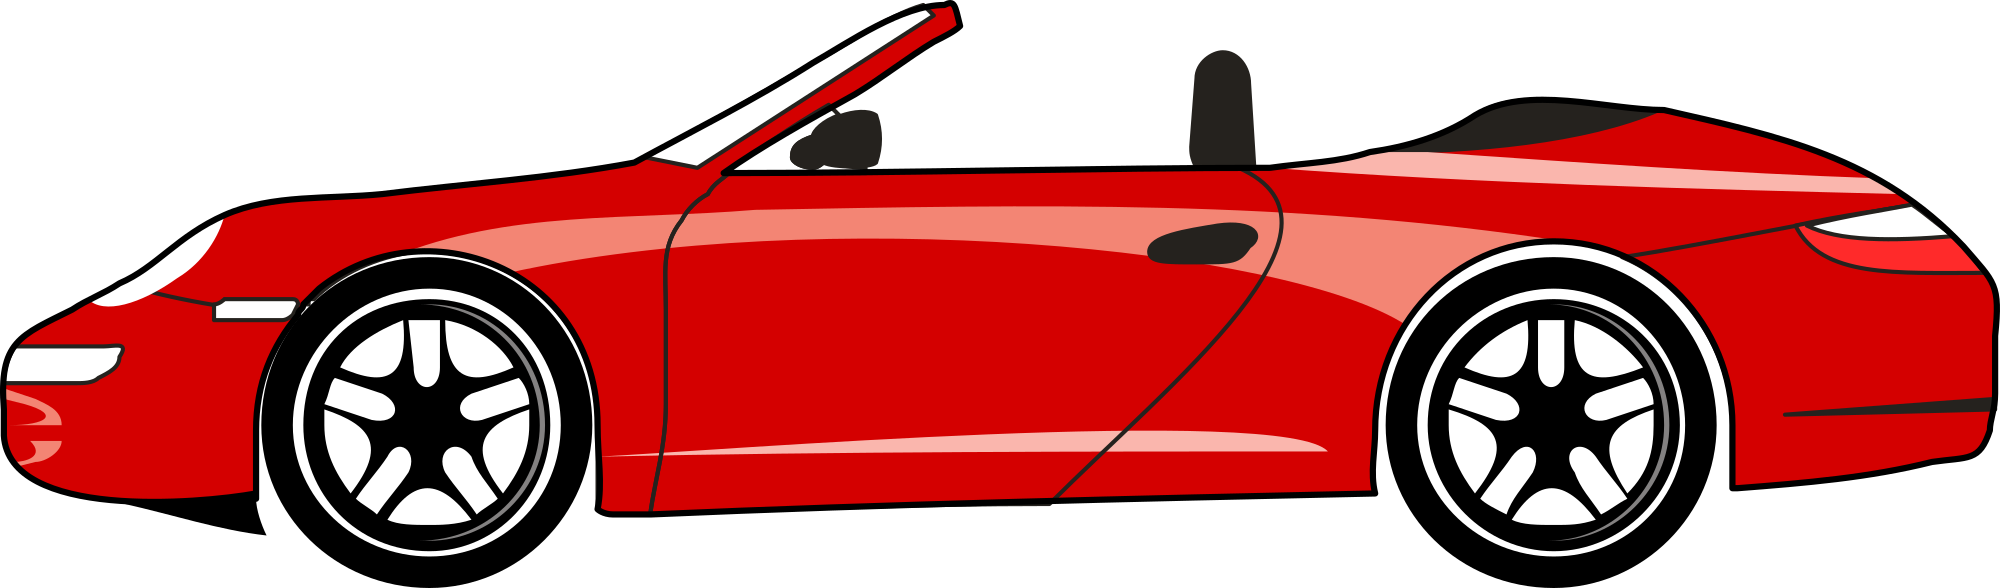 red sports car clip art